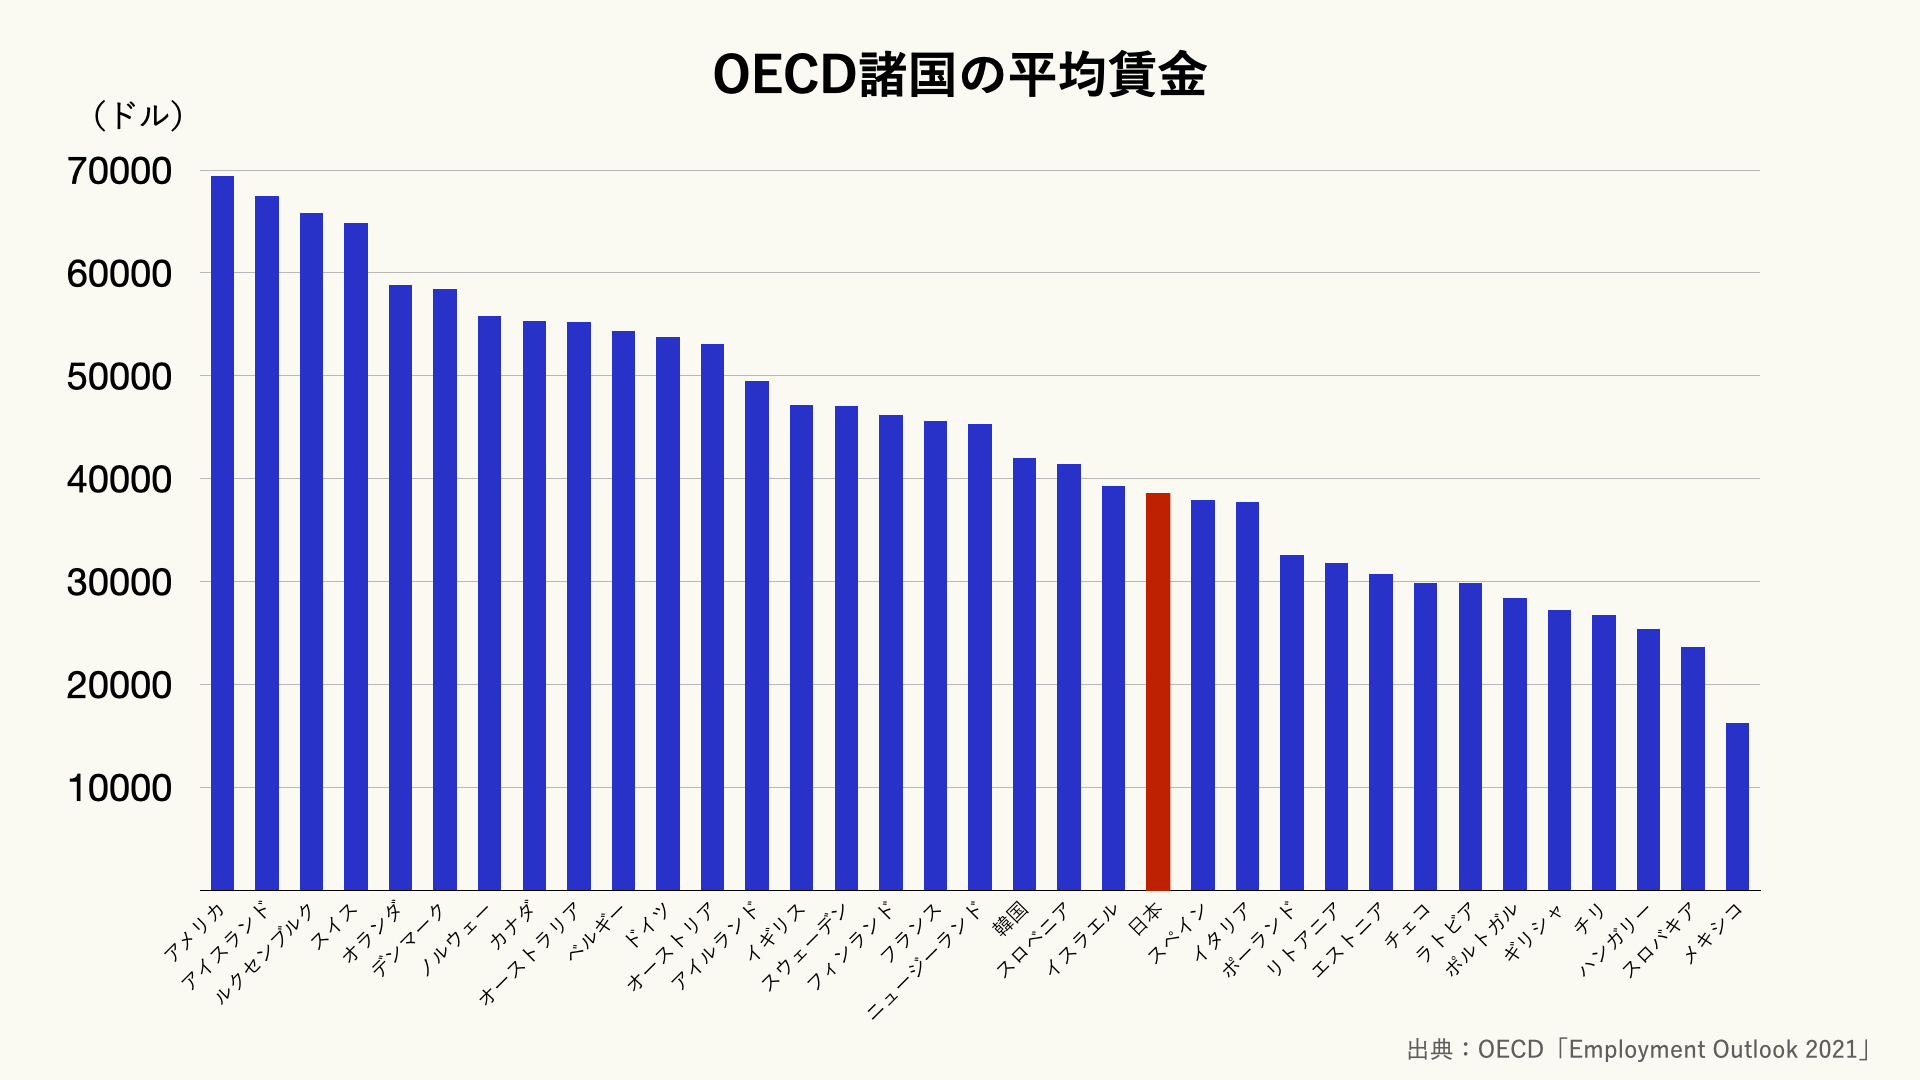 OECD諸国の平均賃金のグラフ